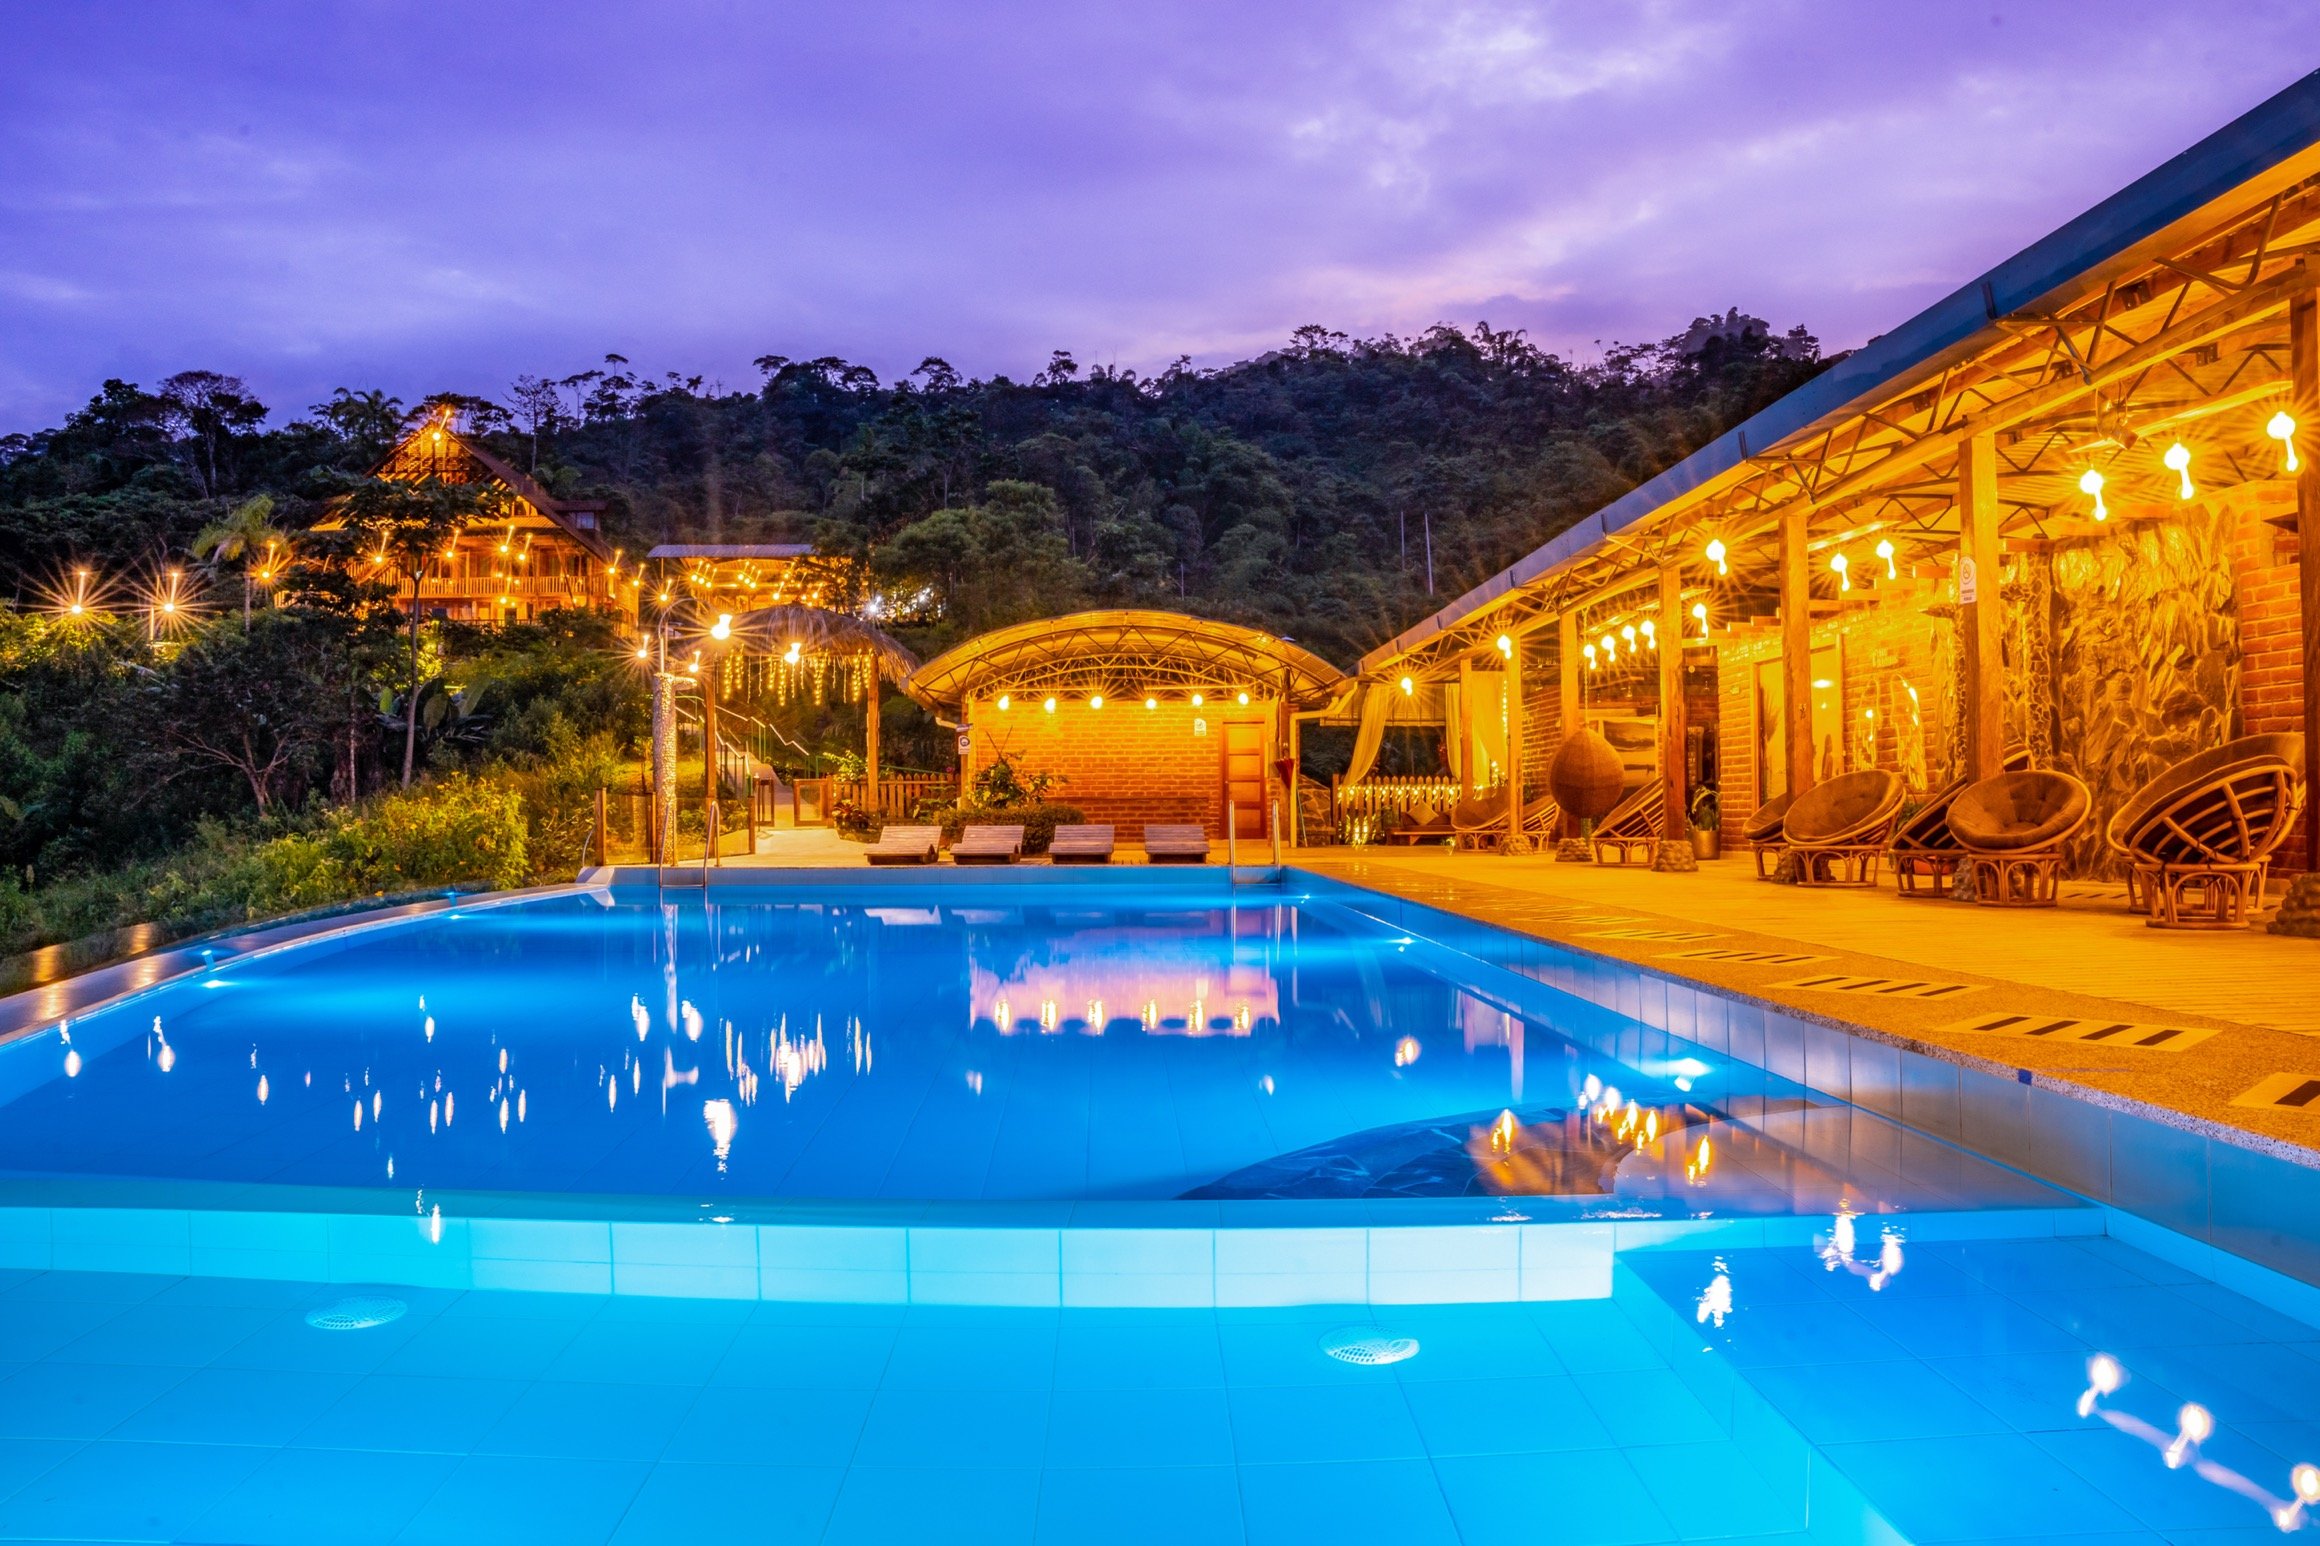 Piscina-infinita-Finca-Heimatlos-Lodge-Hotel-en-Pastaza-Puyo-Amazonia-Ecuador-0004.jpeg